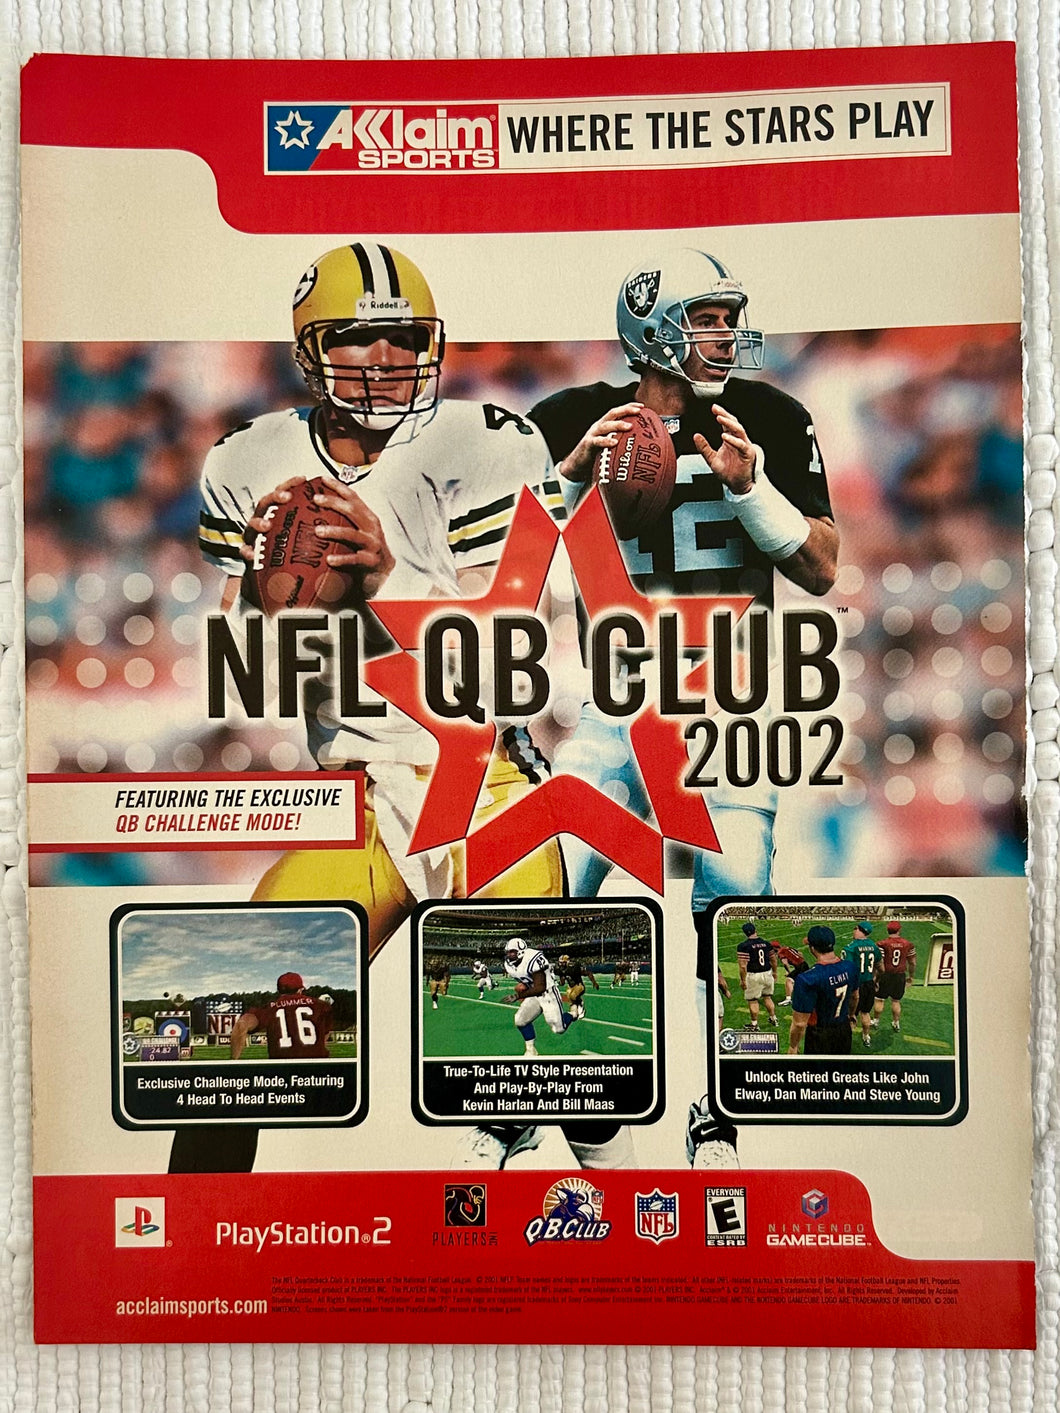 NFL QB Club 2002 - PS2 NGC - Original Vintage Advertisement - Print Ads - Laminated A4 Poster